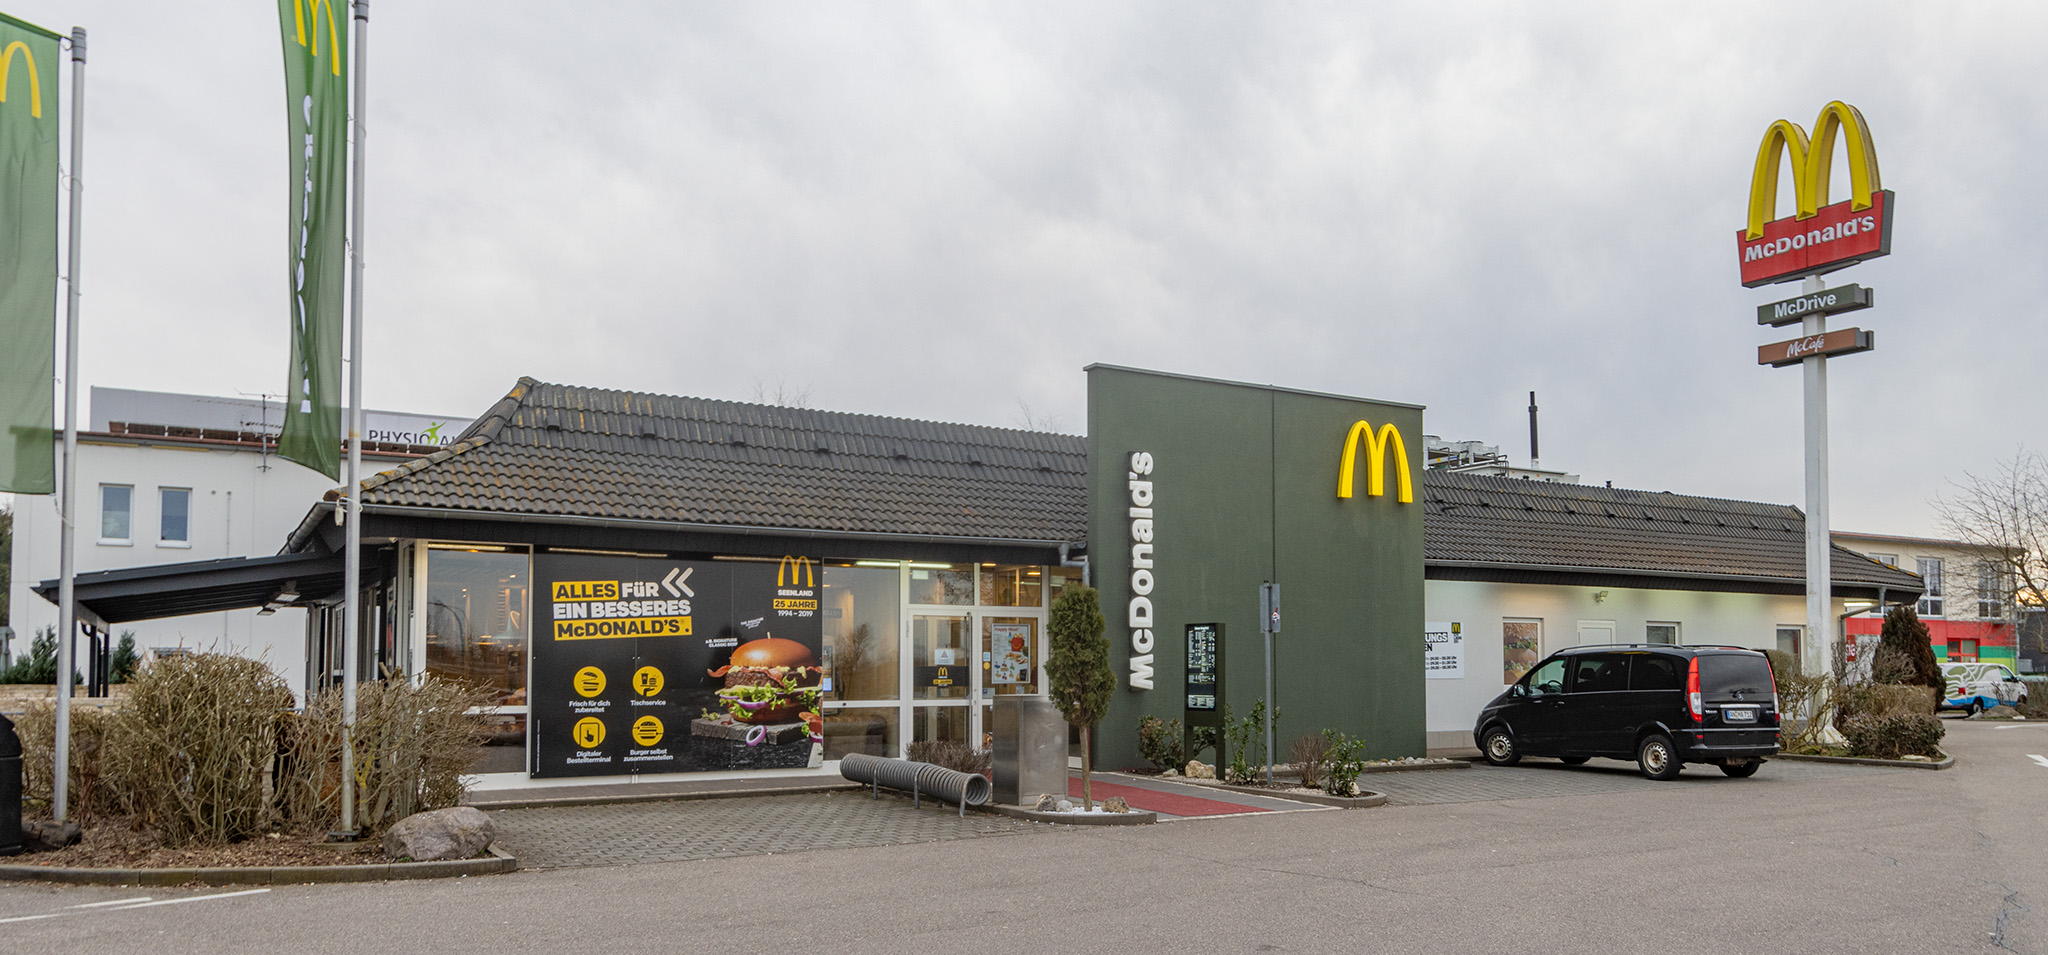 Das McDonald’s-Restaurant in Gunzenhausen